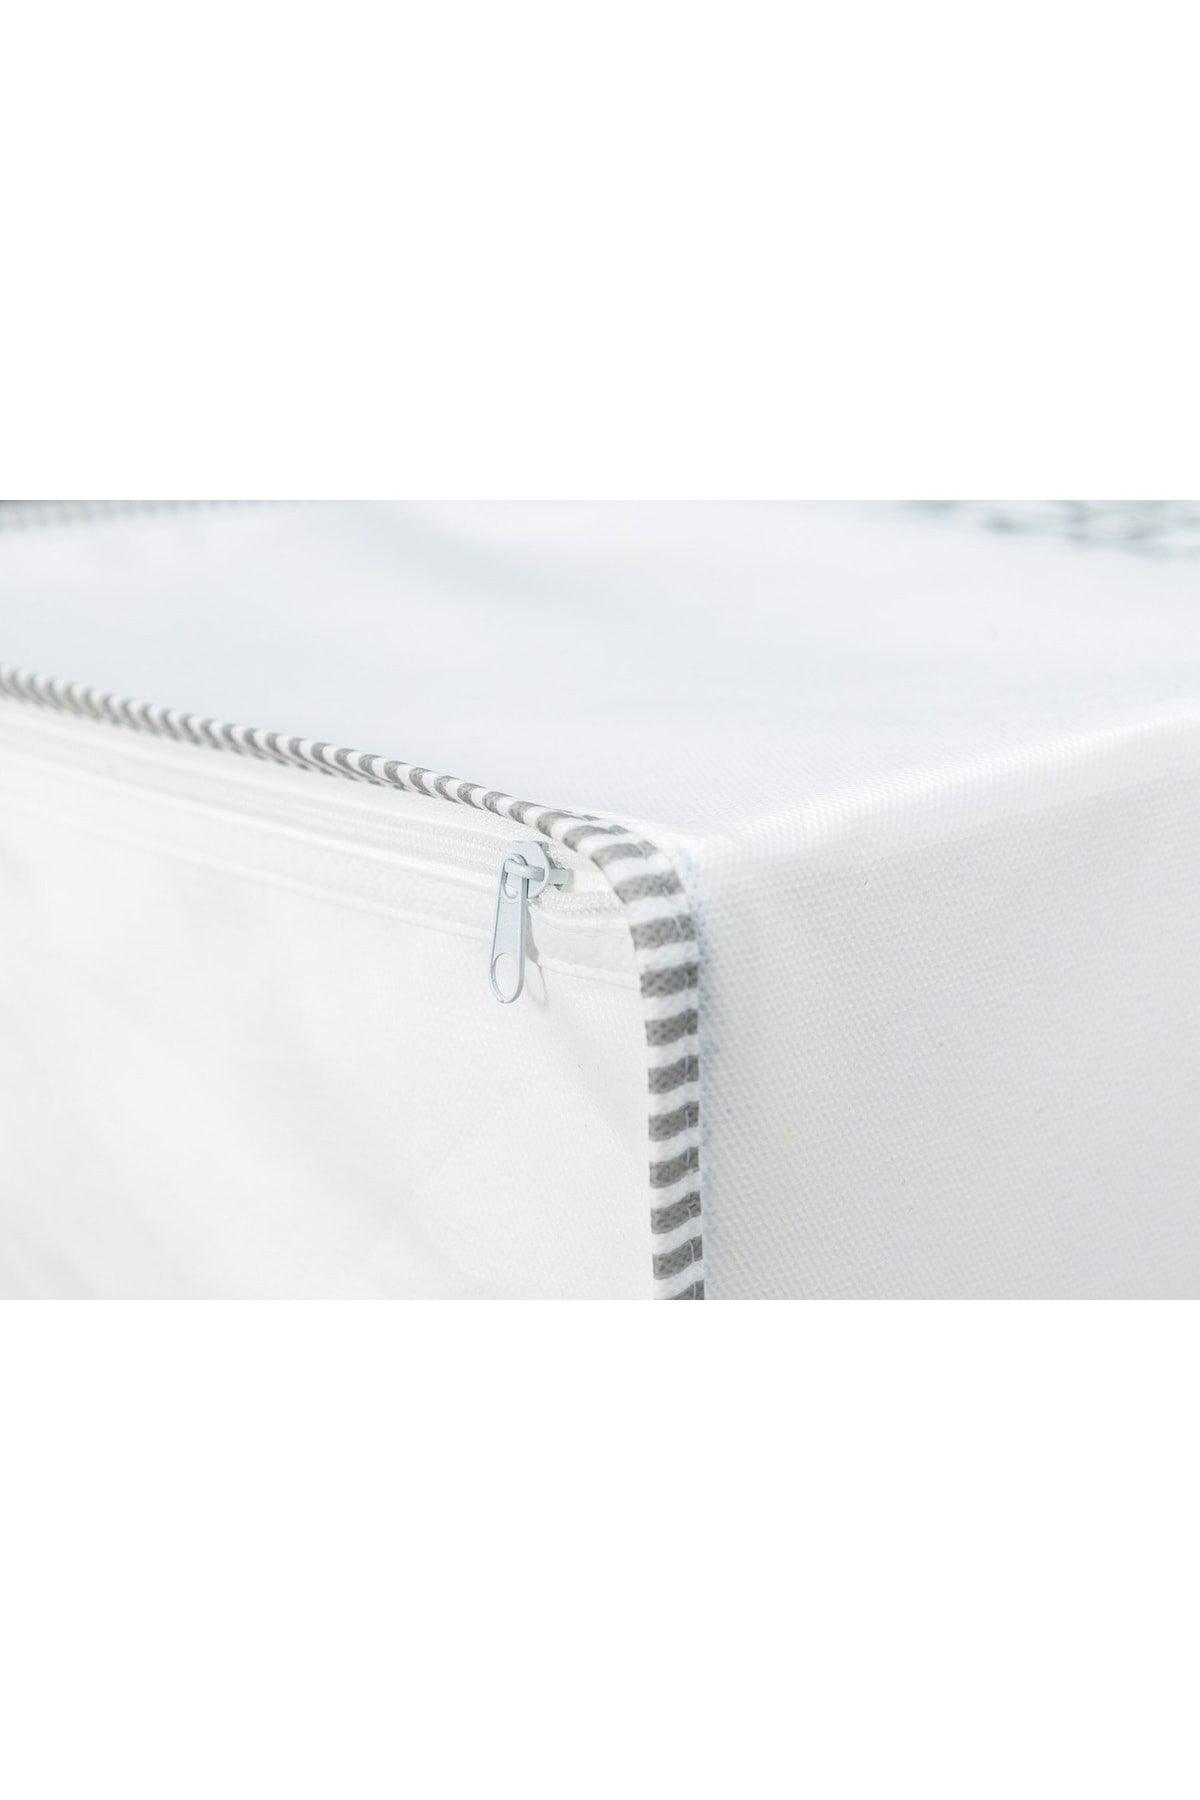 Under Bed Base Bag Zippered Organizer Drawstring Pillow Bag 3 Pcs. 52 X 28 X 22 Cm 104188 - Swordslife